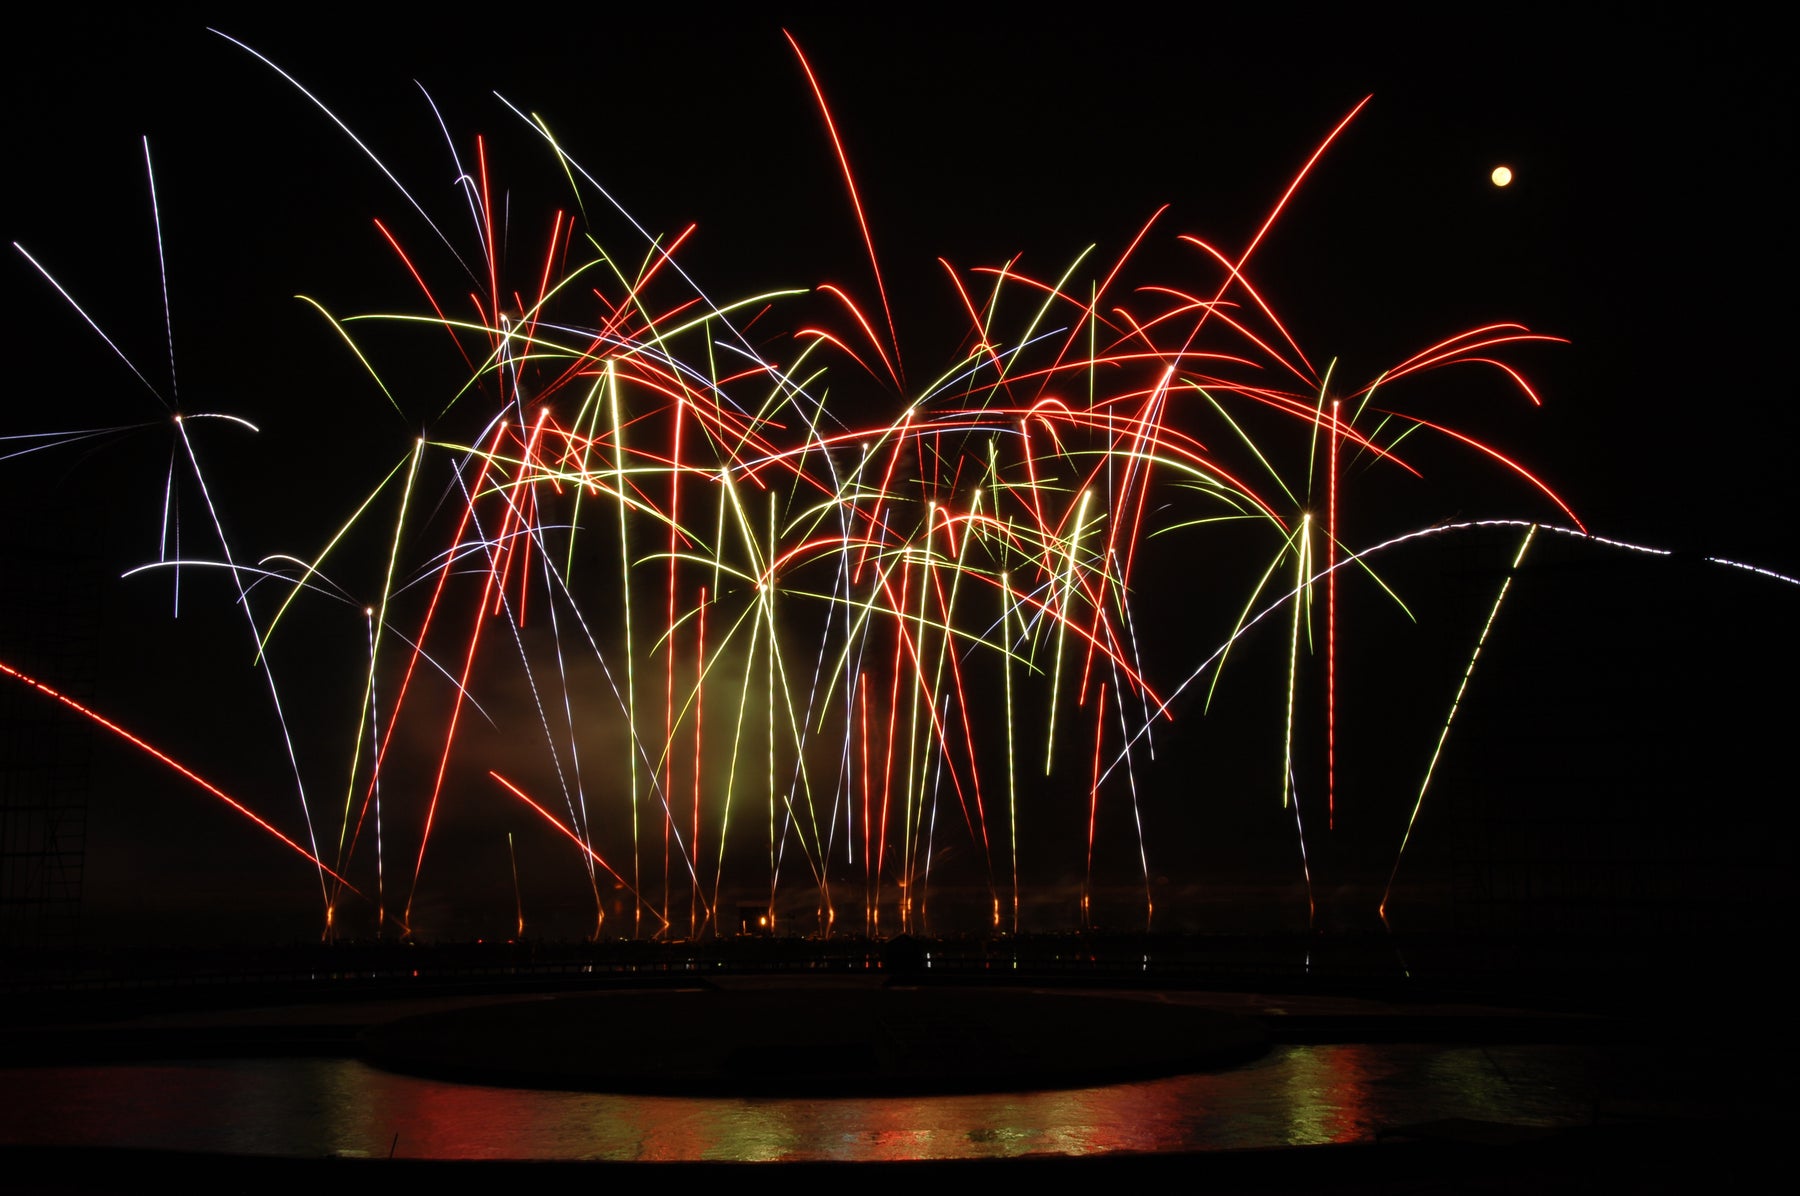 Clacton Pier to celebrate 150th birthday with free firework displays